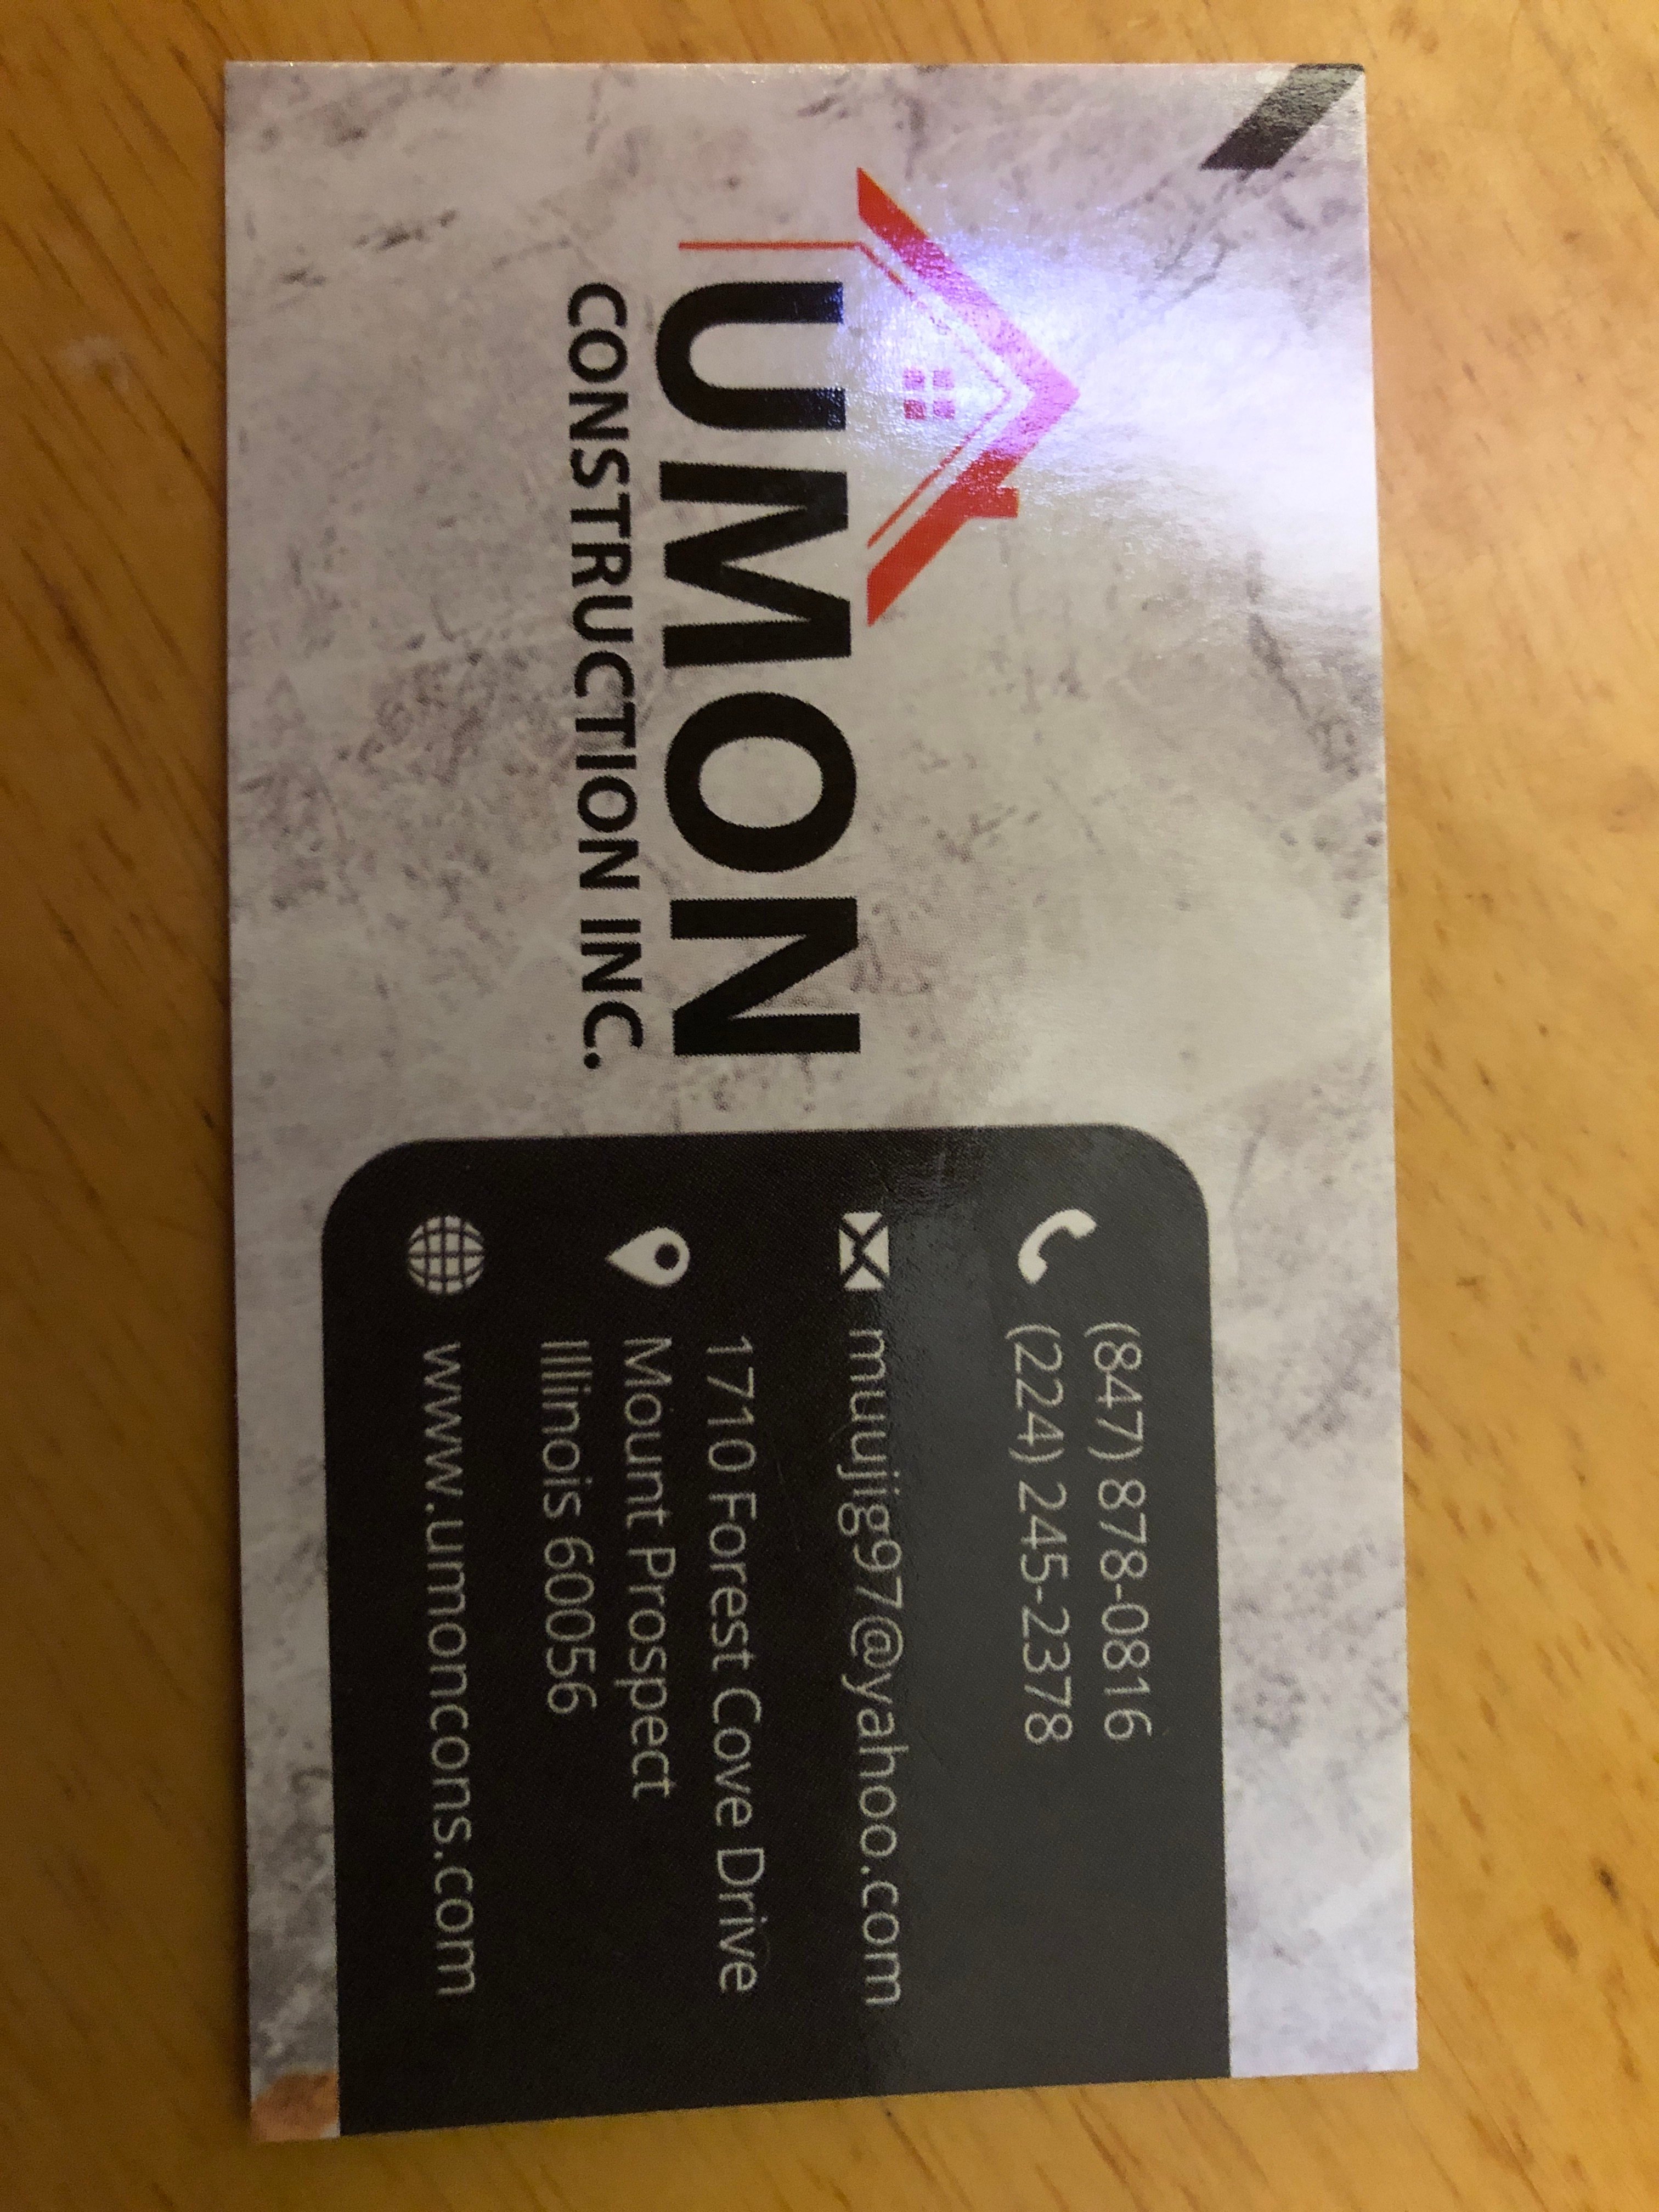 Umon Construction, Inc. Logo